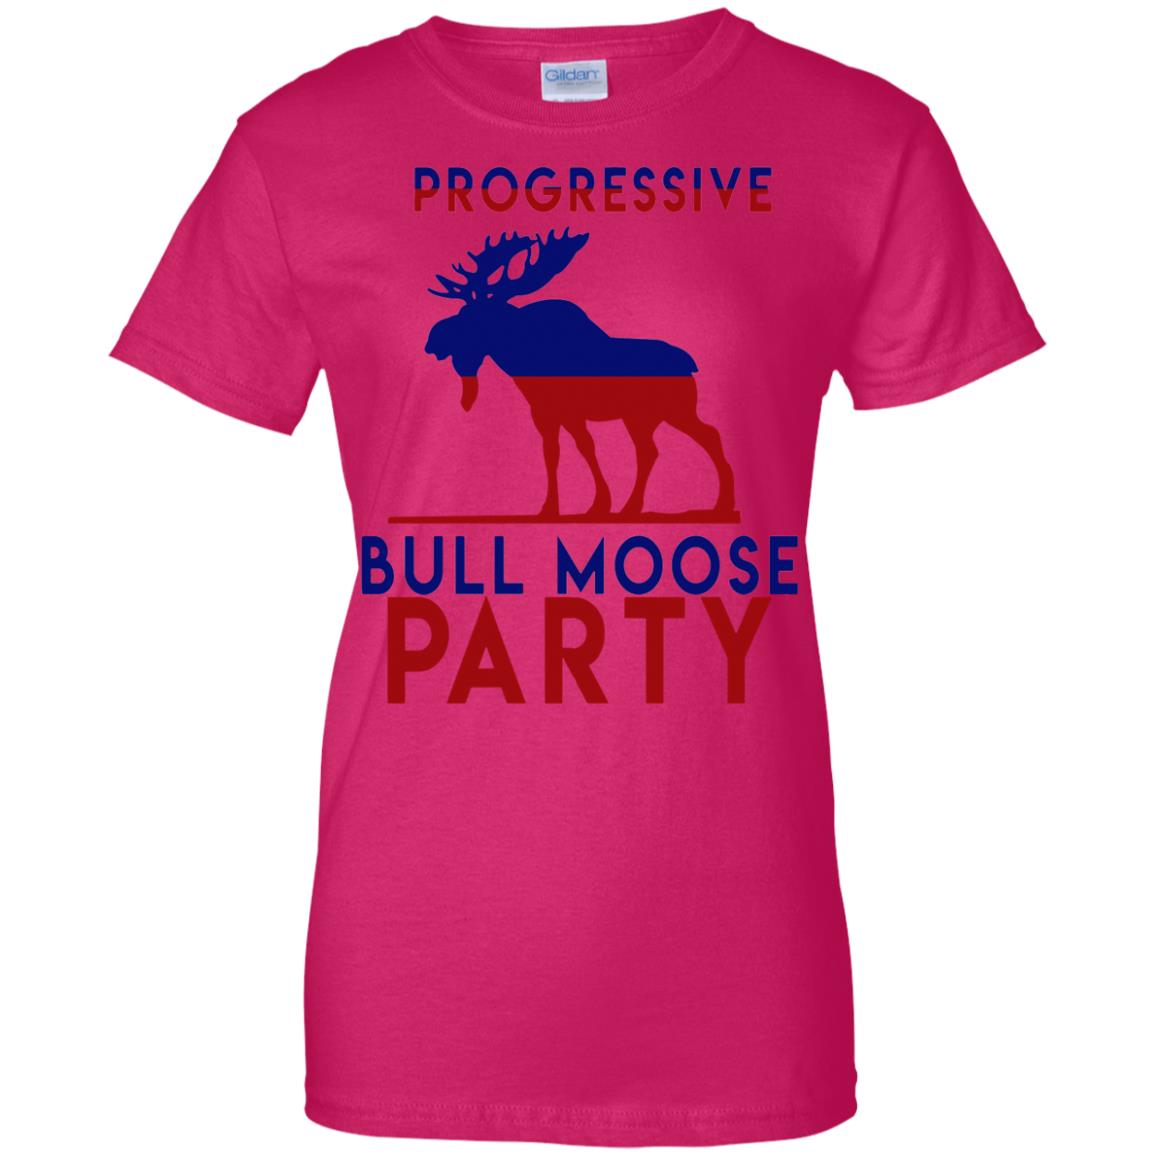 Bull Moose Party Shirt 10 Off Favormerch